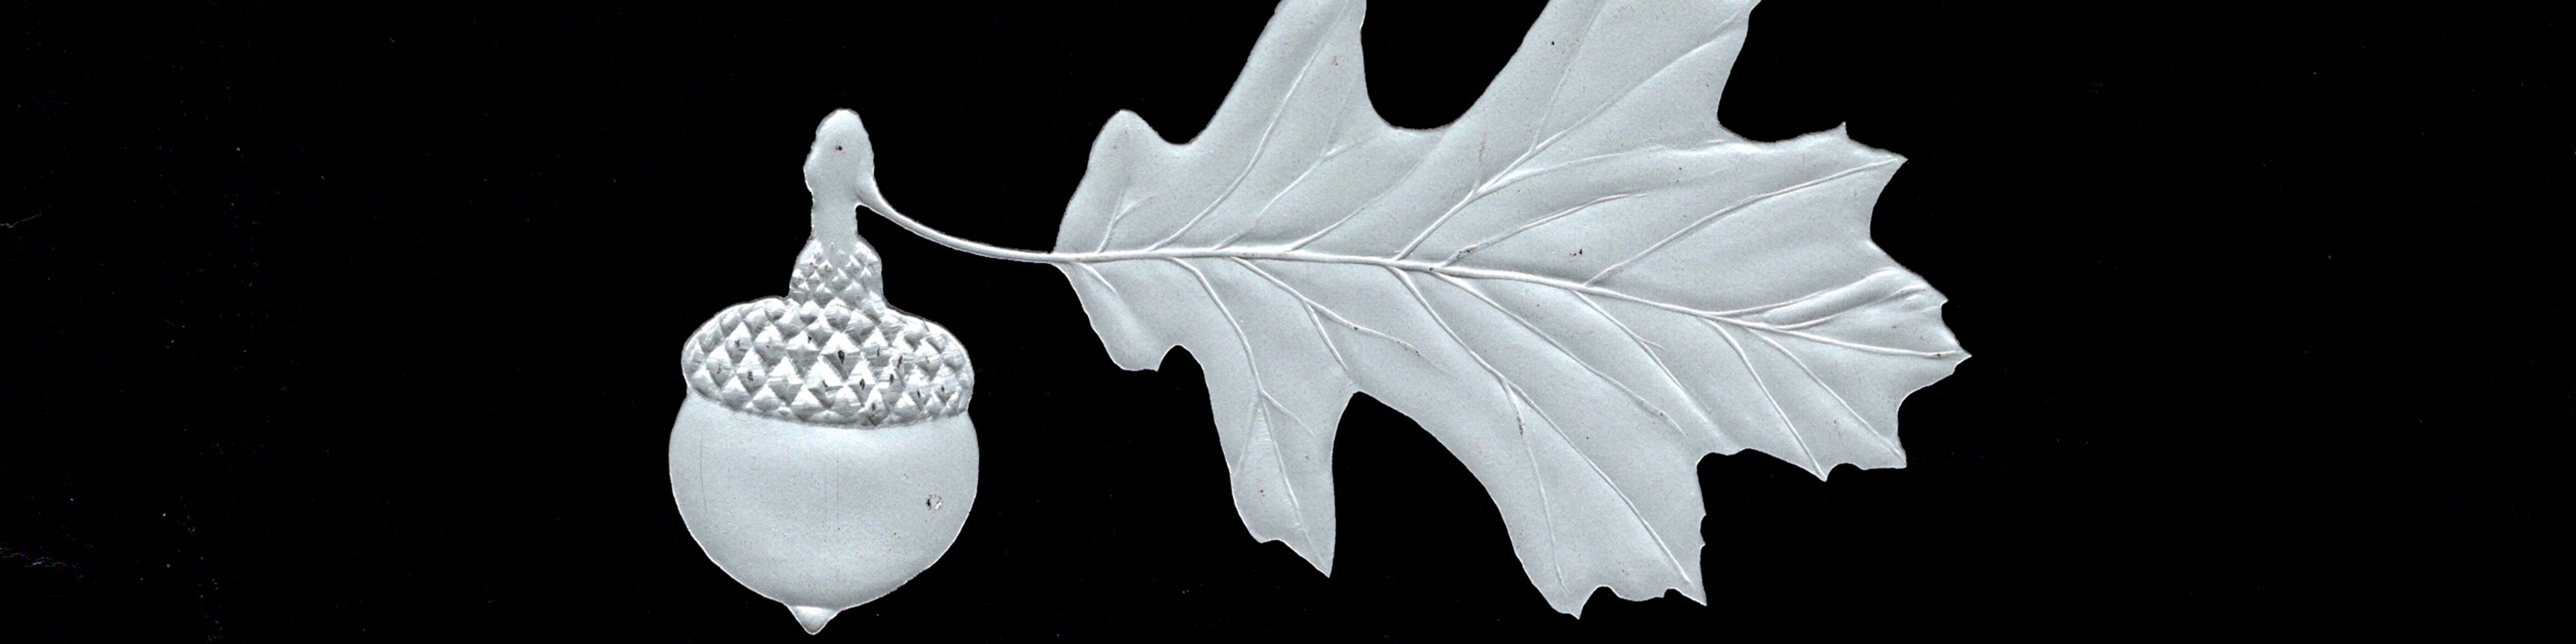 a silver acorn and oak leaf on a black background